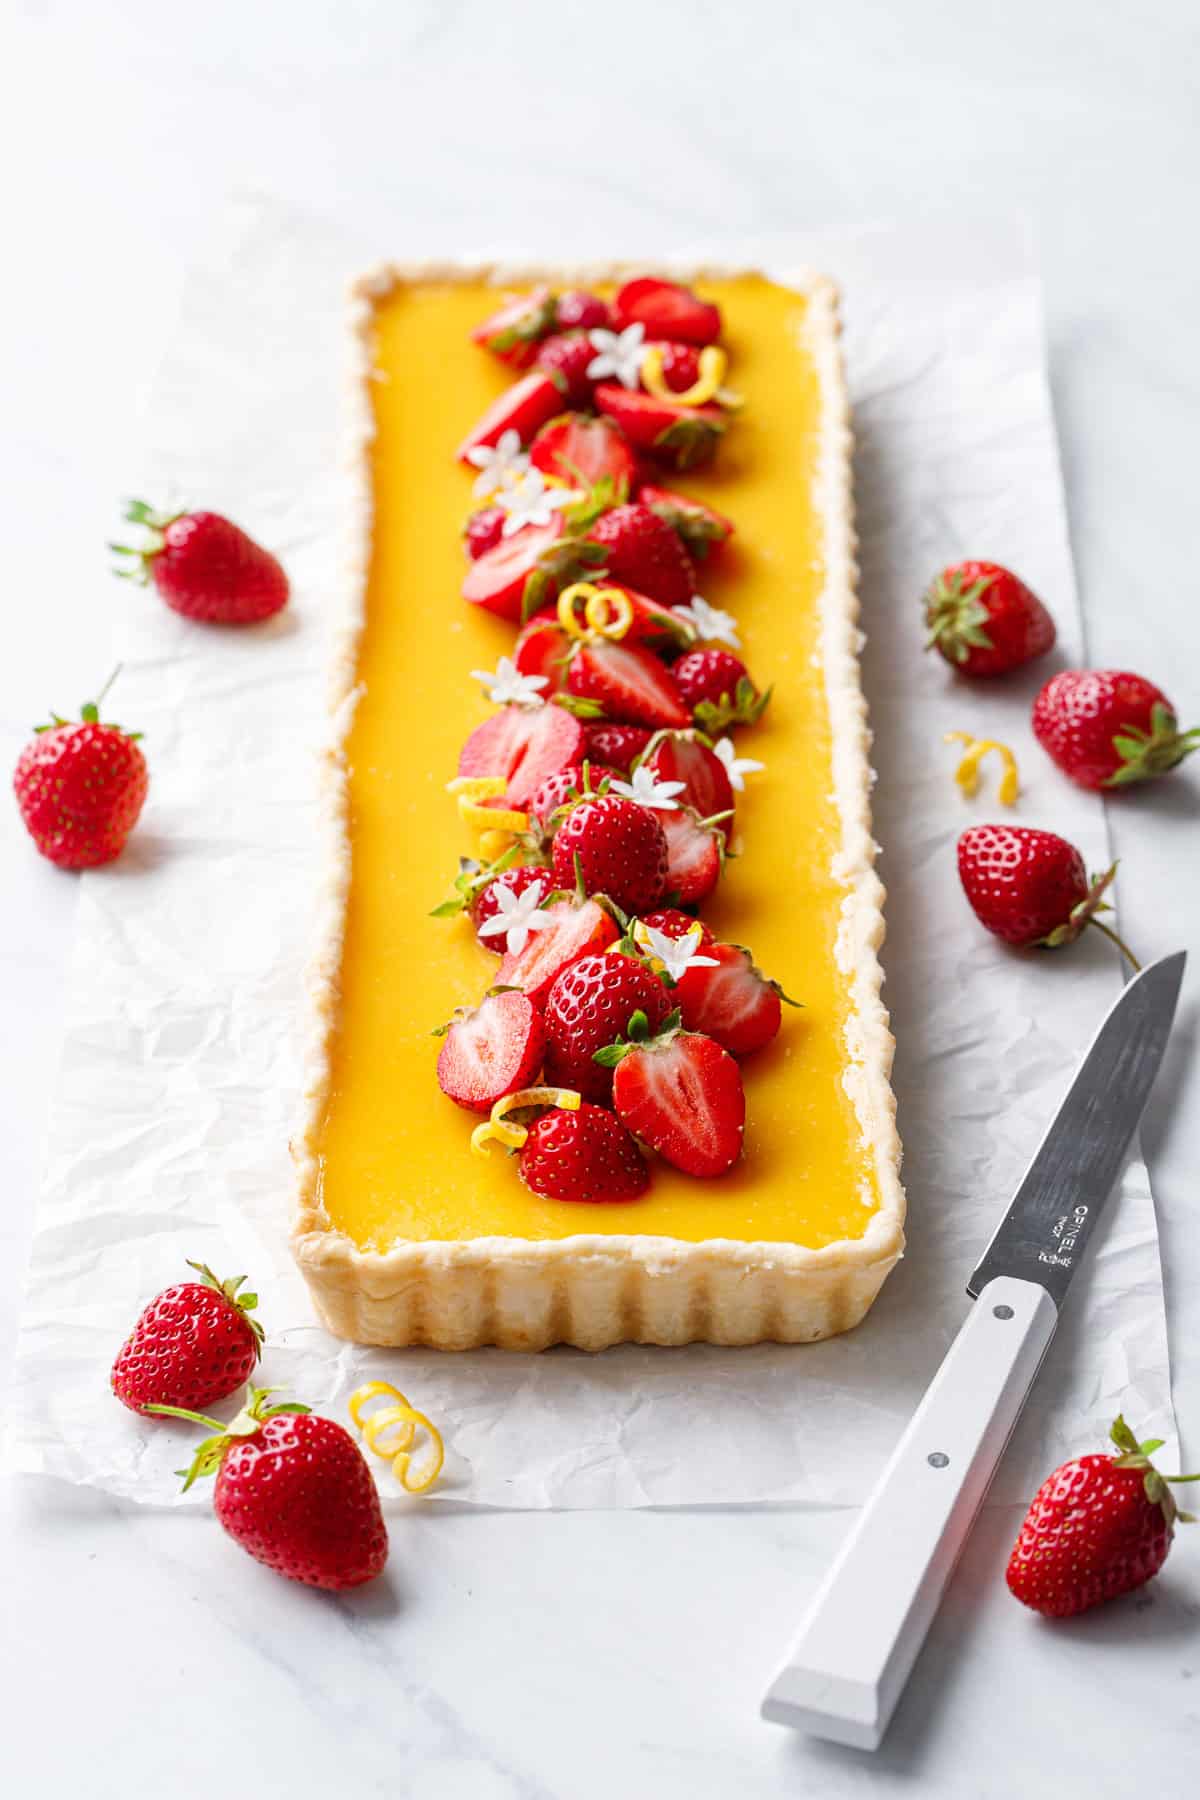 Rectangular Strawberry Meyer Lemon Tart topped with fresh strawberries, lemon twists and edible flowers.